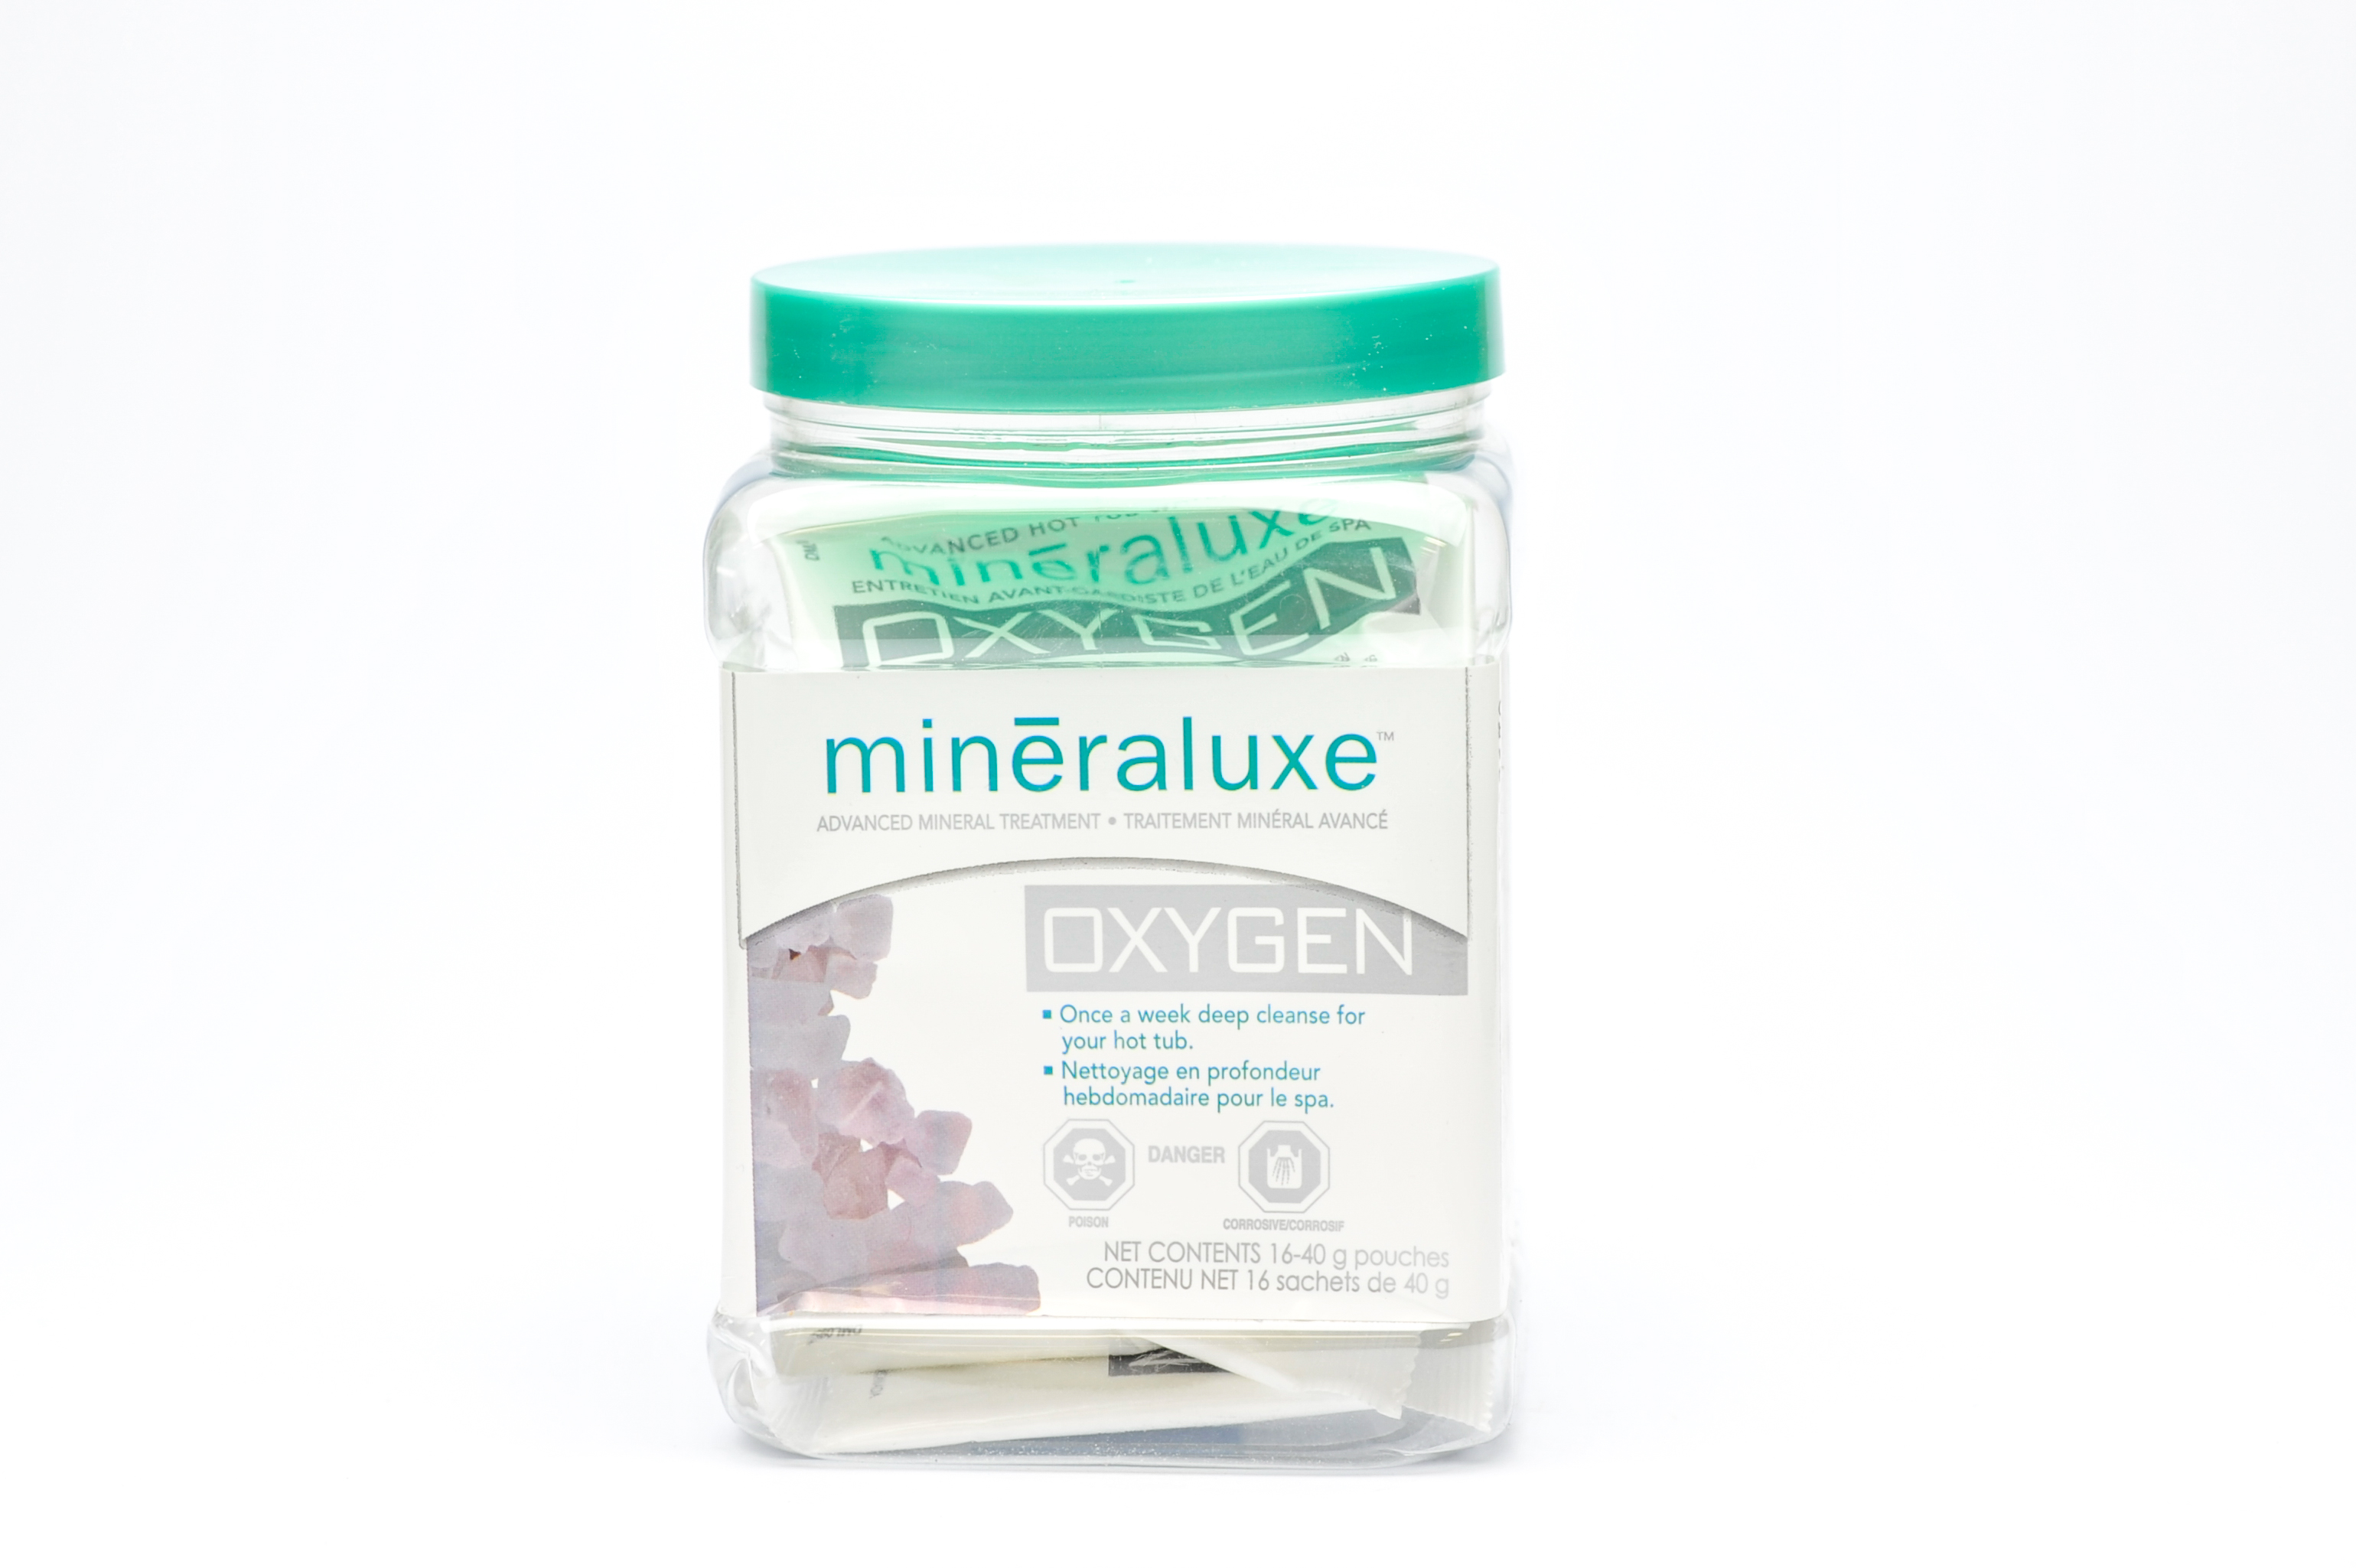 Mineraluxe Oxygen Plus 8 Per Case